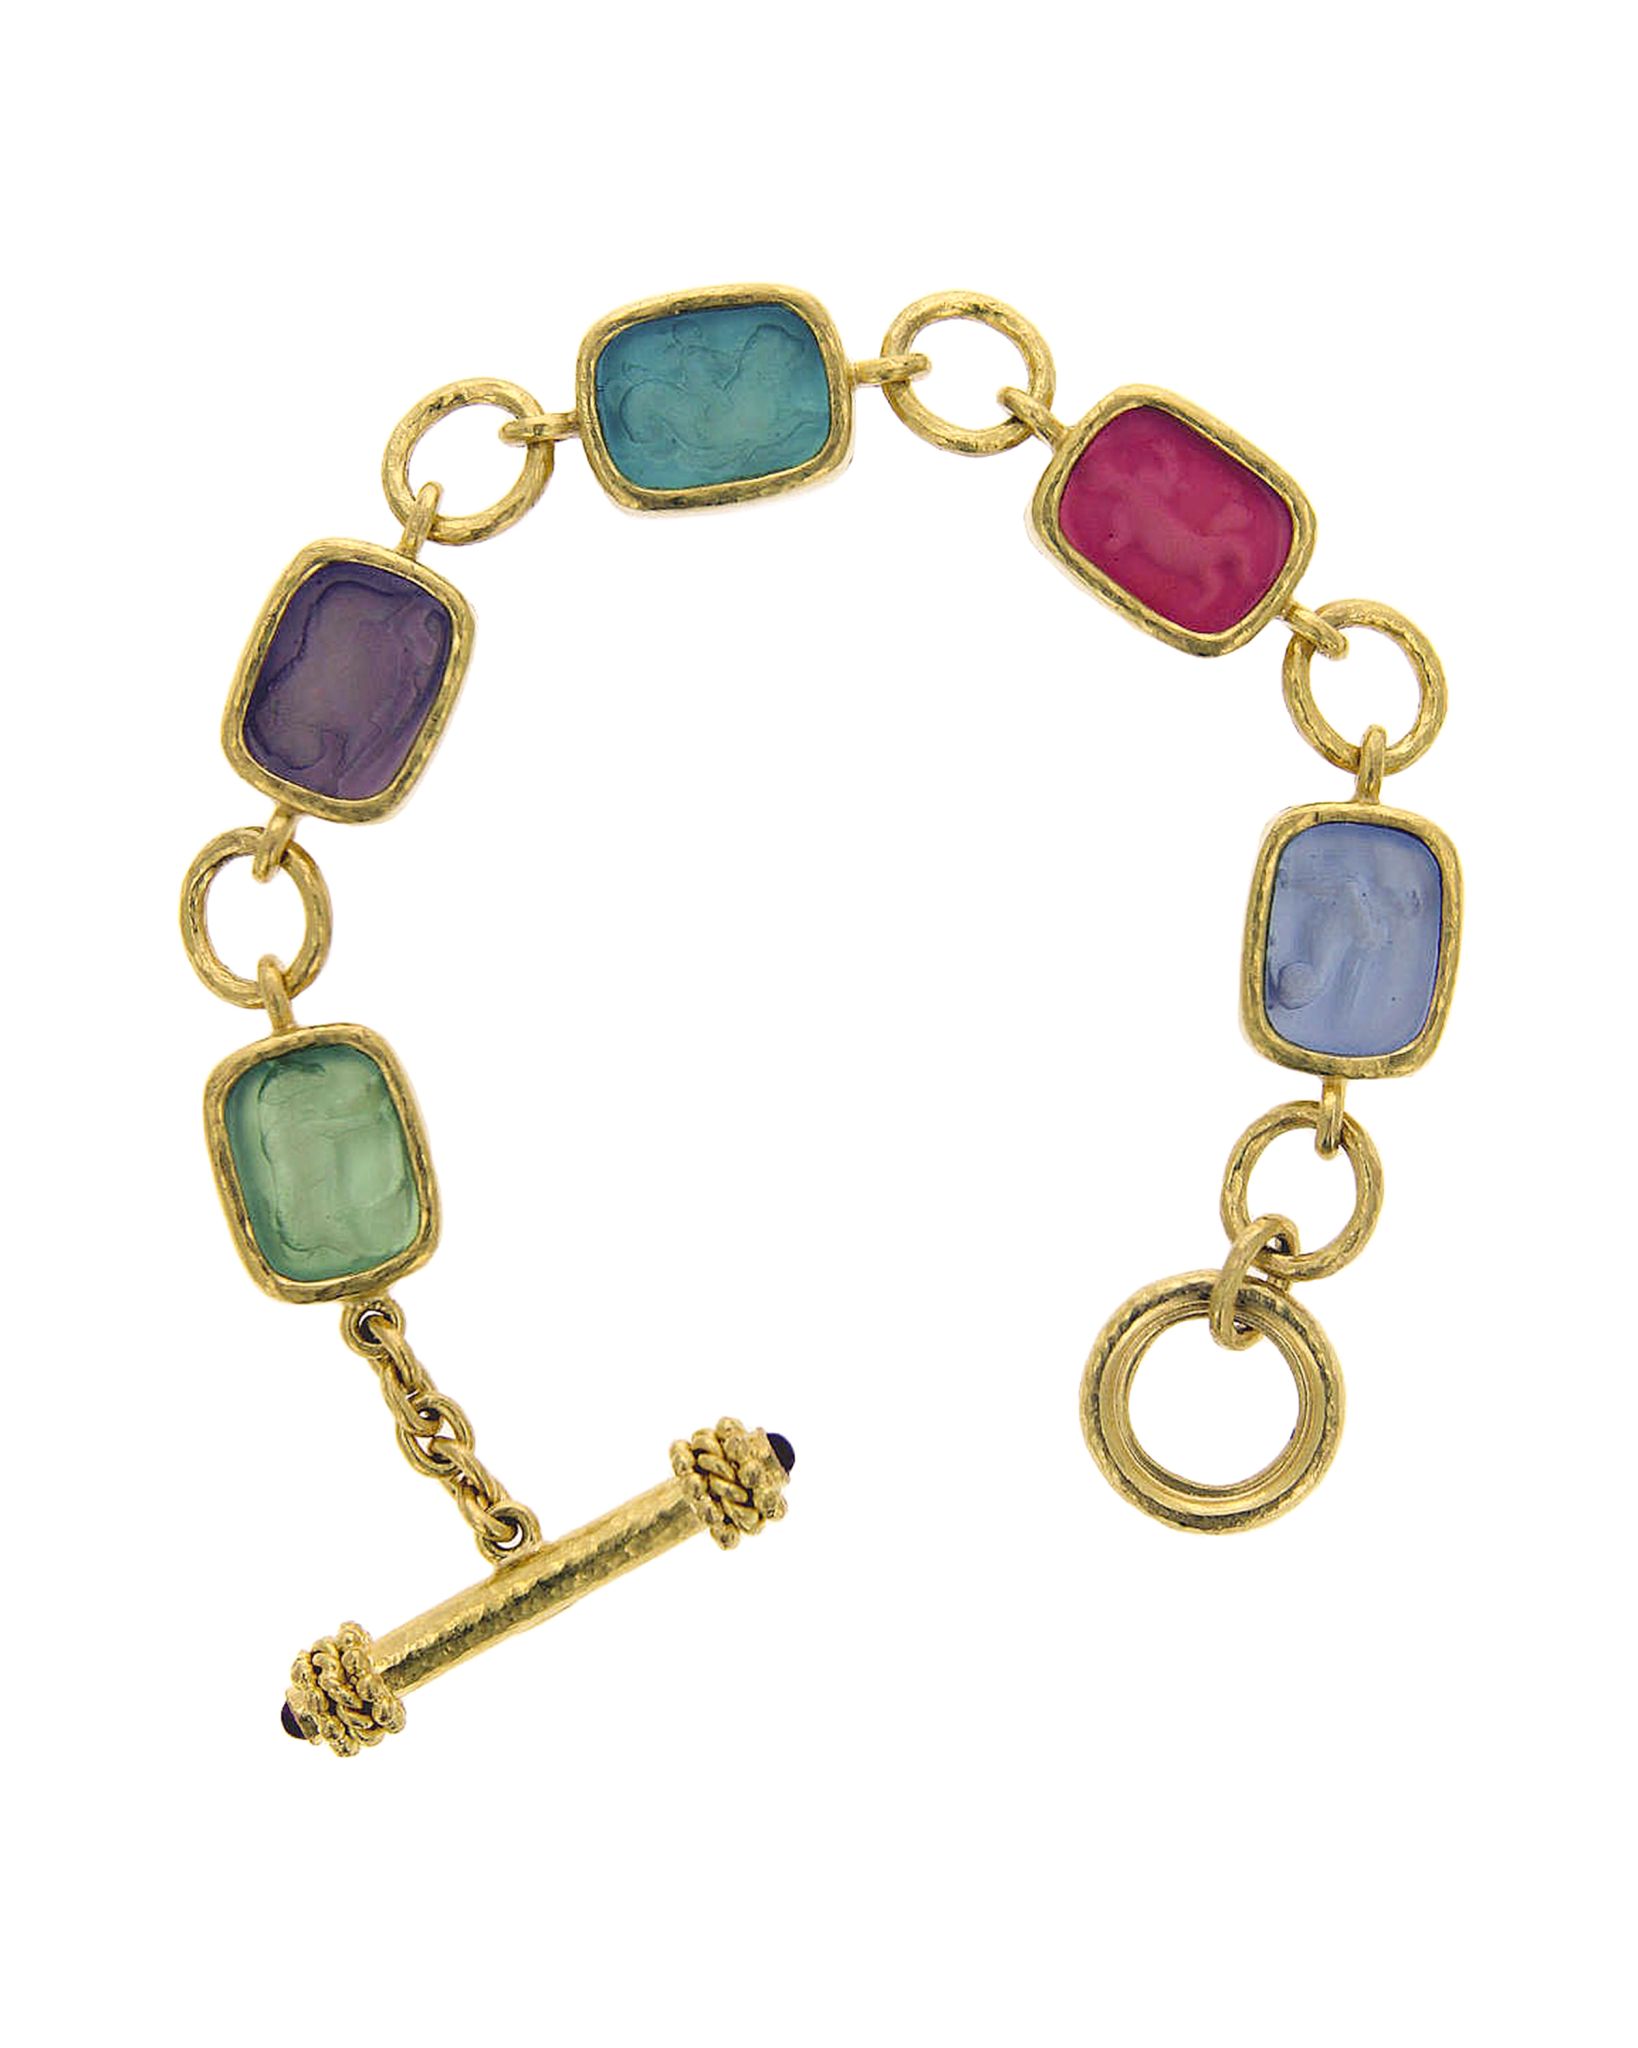 Multi-colored jewels on a gold bracelet.